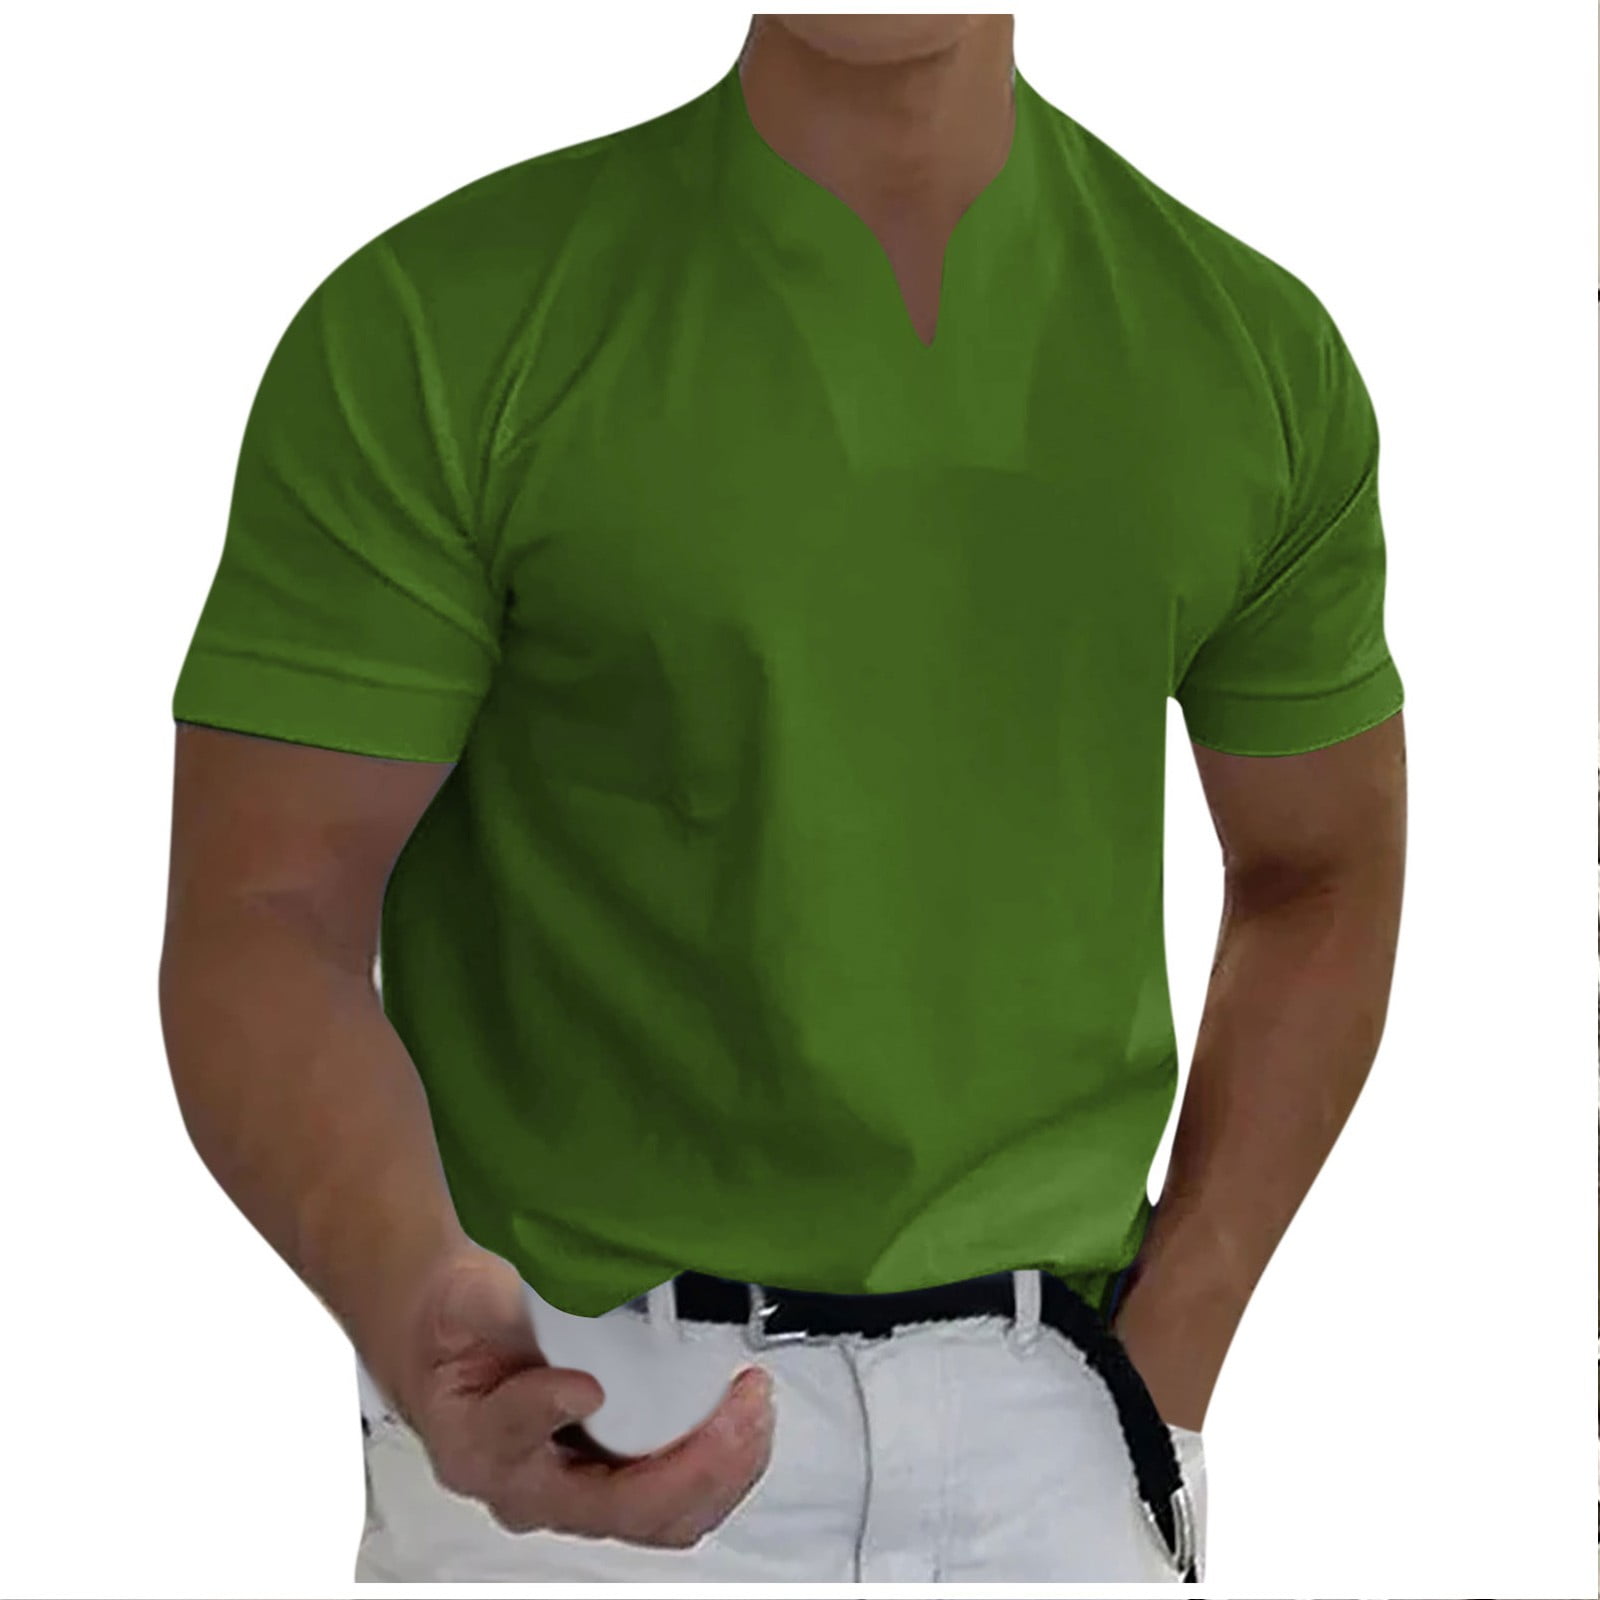 2023 3D Golden Chain Print Men's Beach Shirts Summer Style Short Sleeve  Luxury Men Clothing Hip Hop Tops & Tees Plus Size 5XL